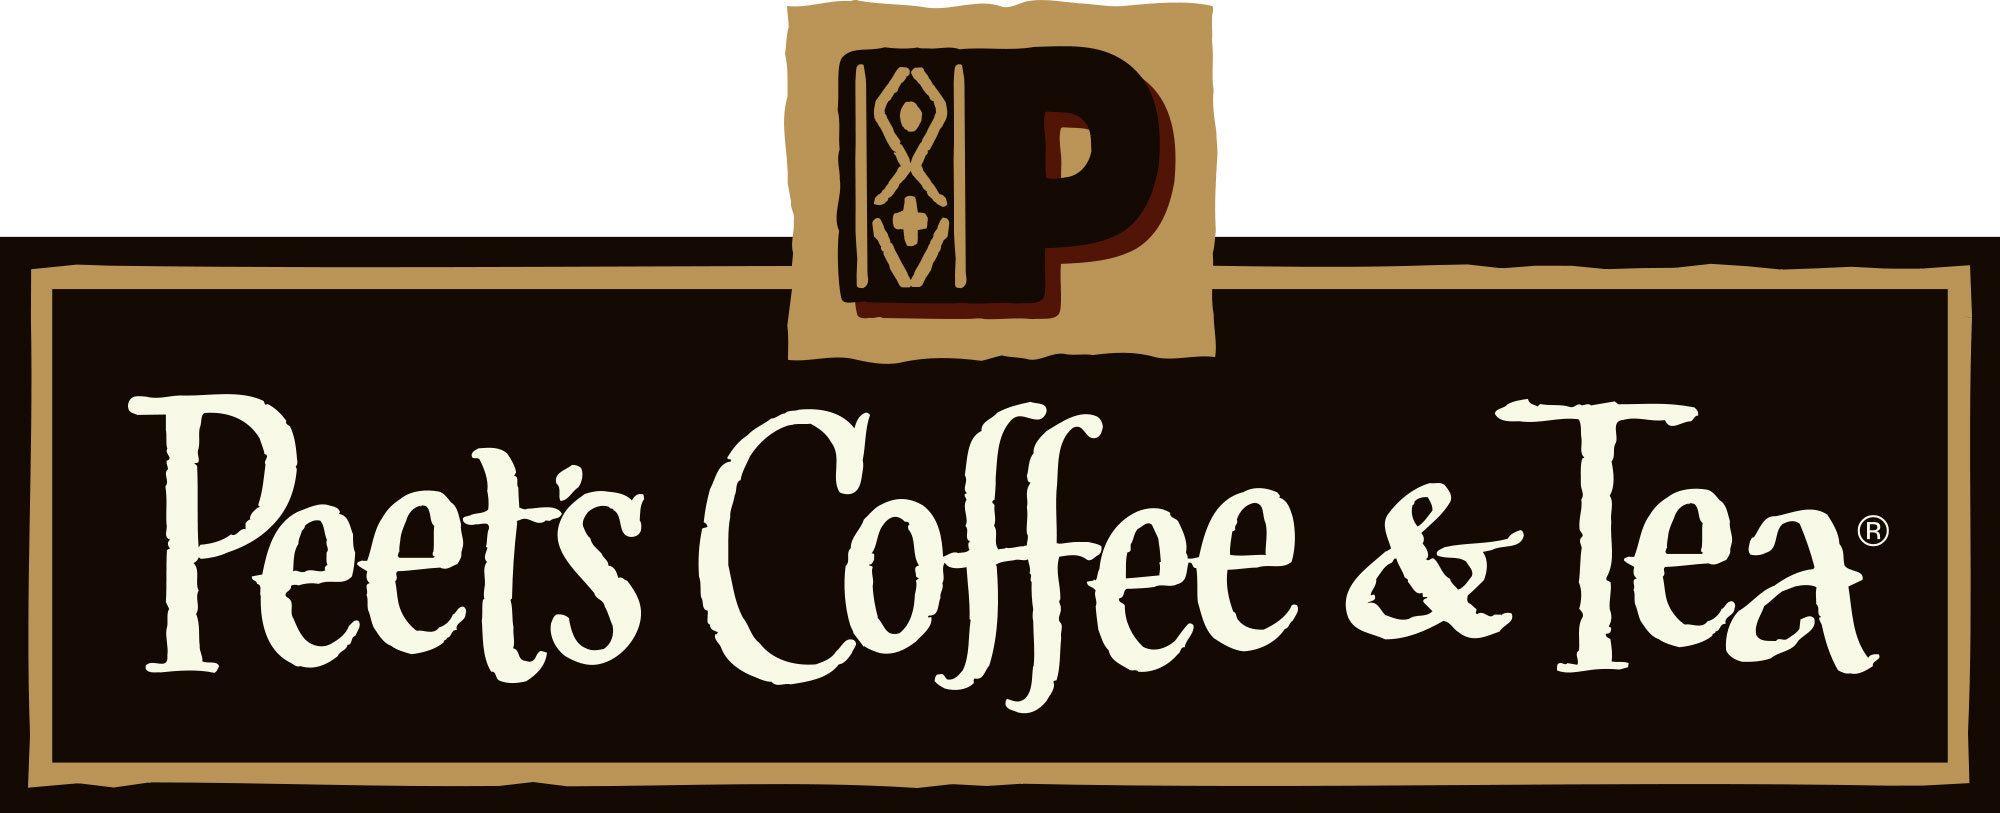 Peet's Coffee New Logo - Peet's Coffee & Tea - 2ndvote